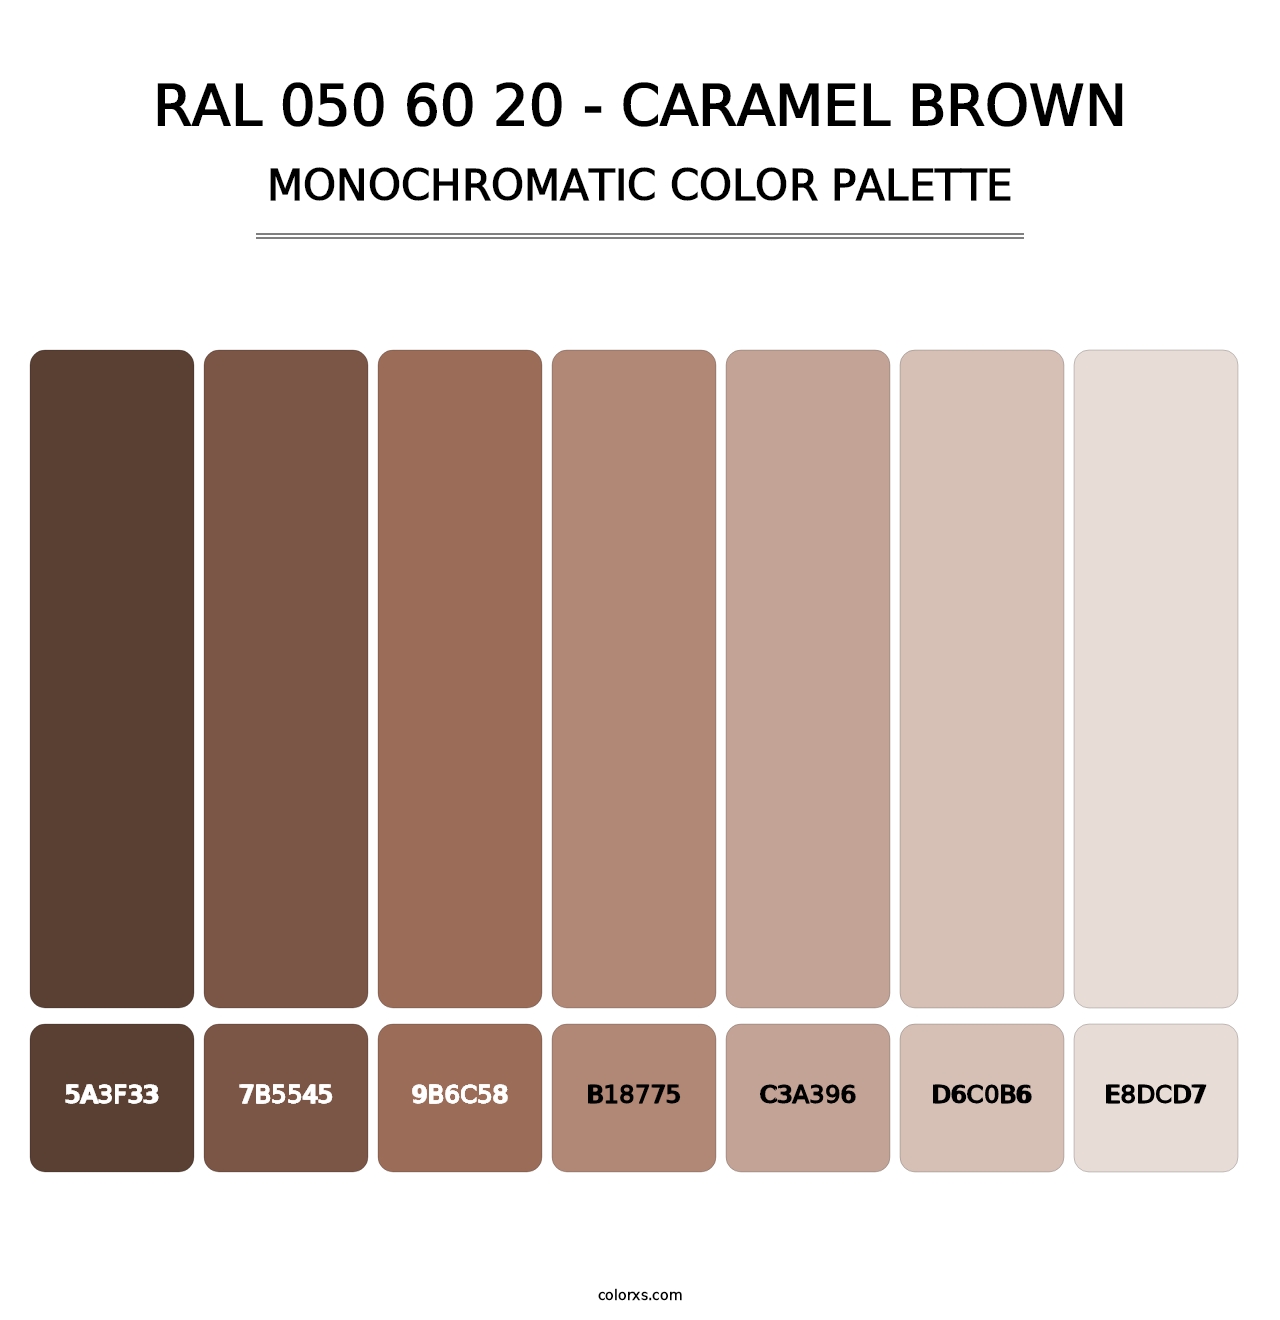 RAL 050 60 20 - Caramel Brown - Monochromatic Color Palette